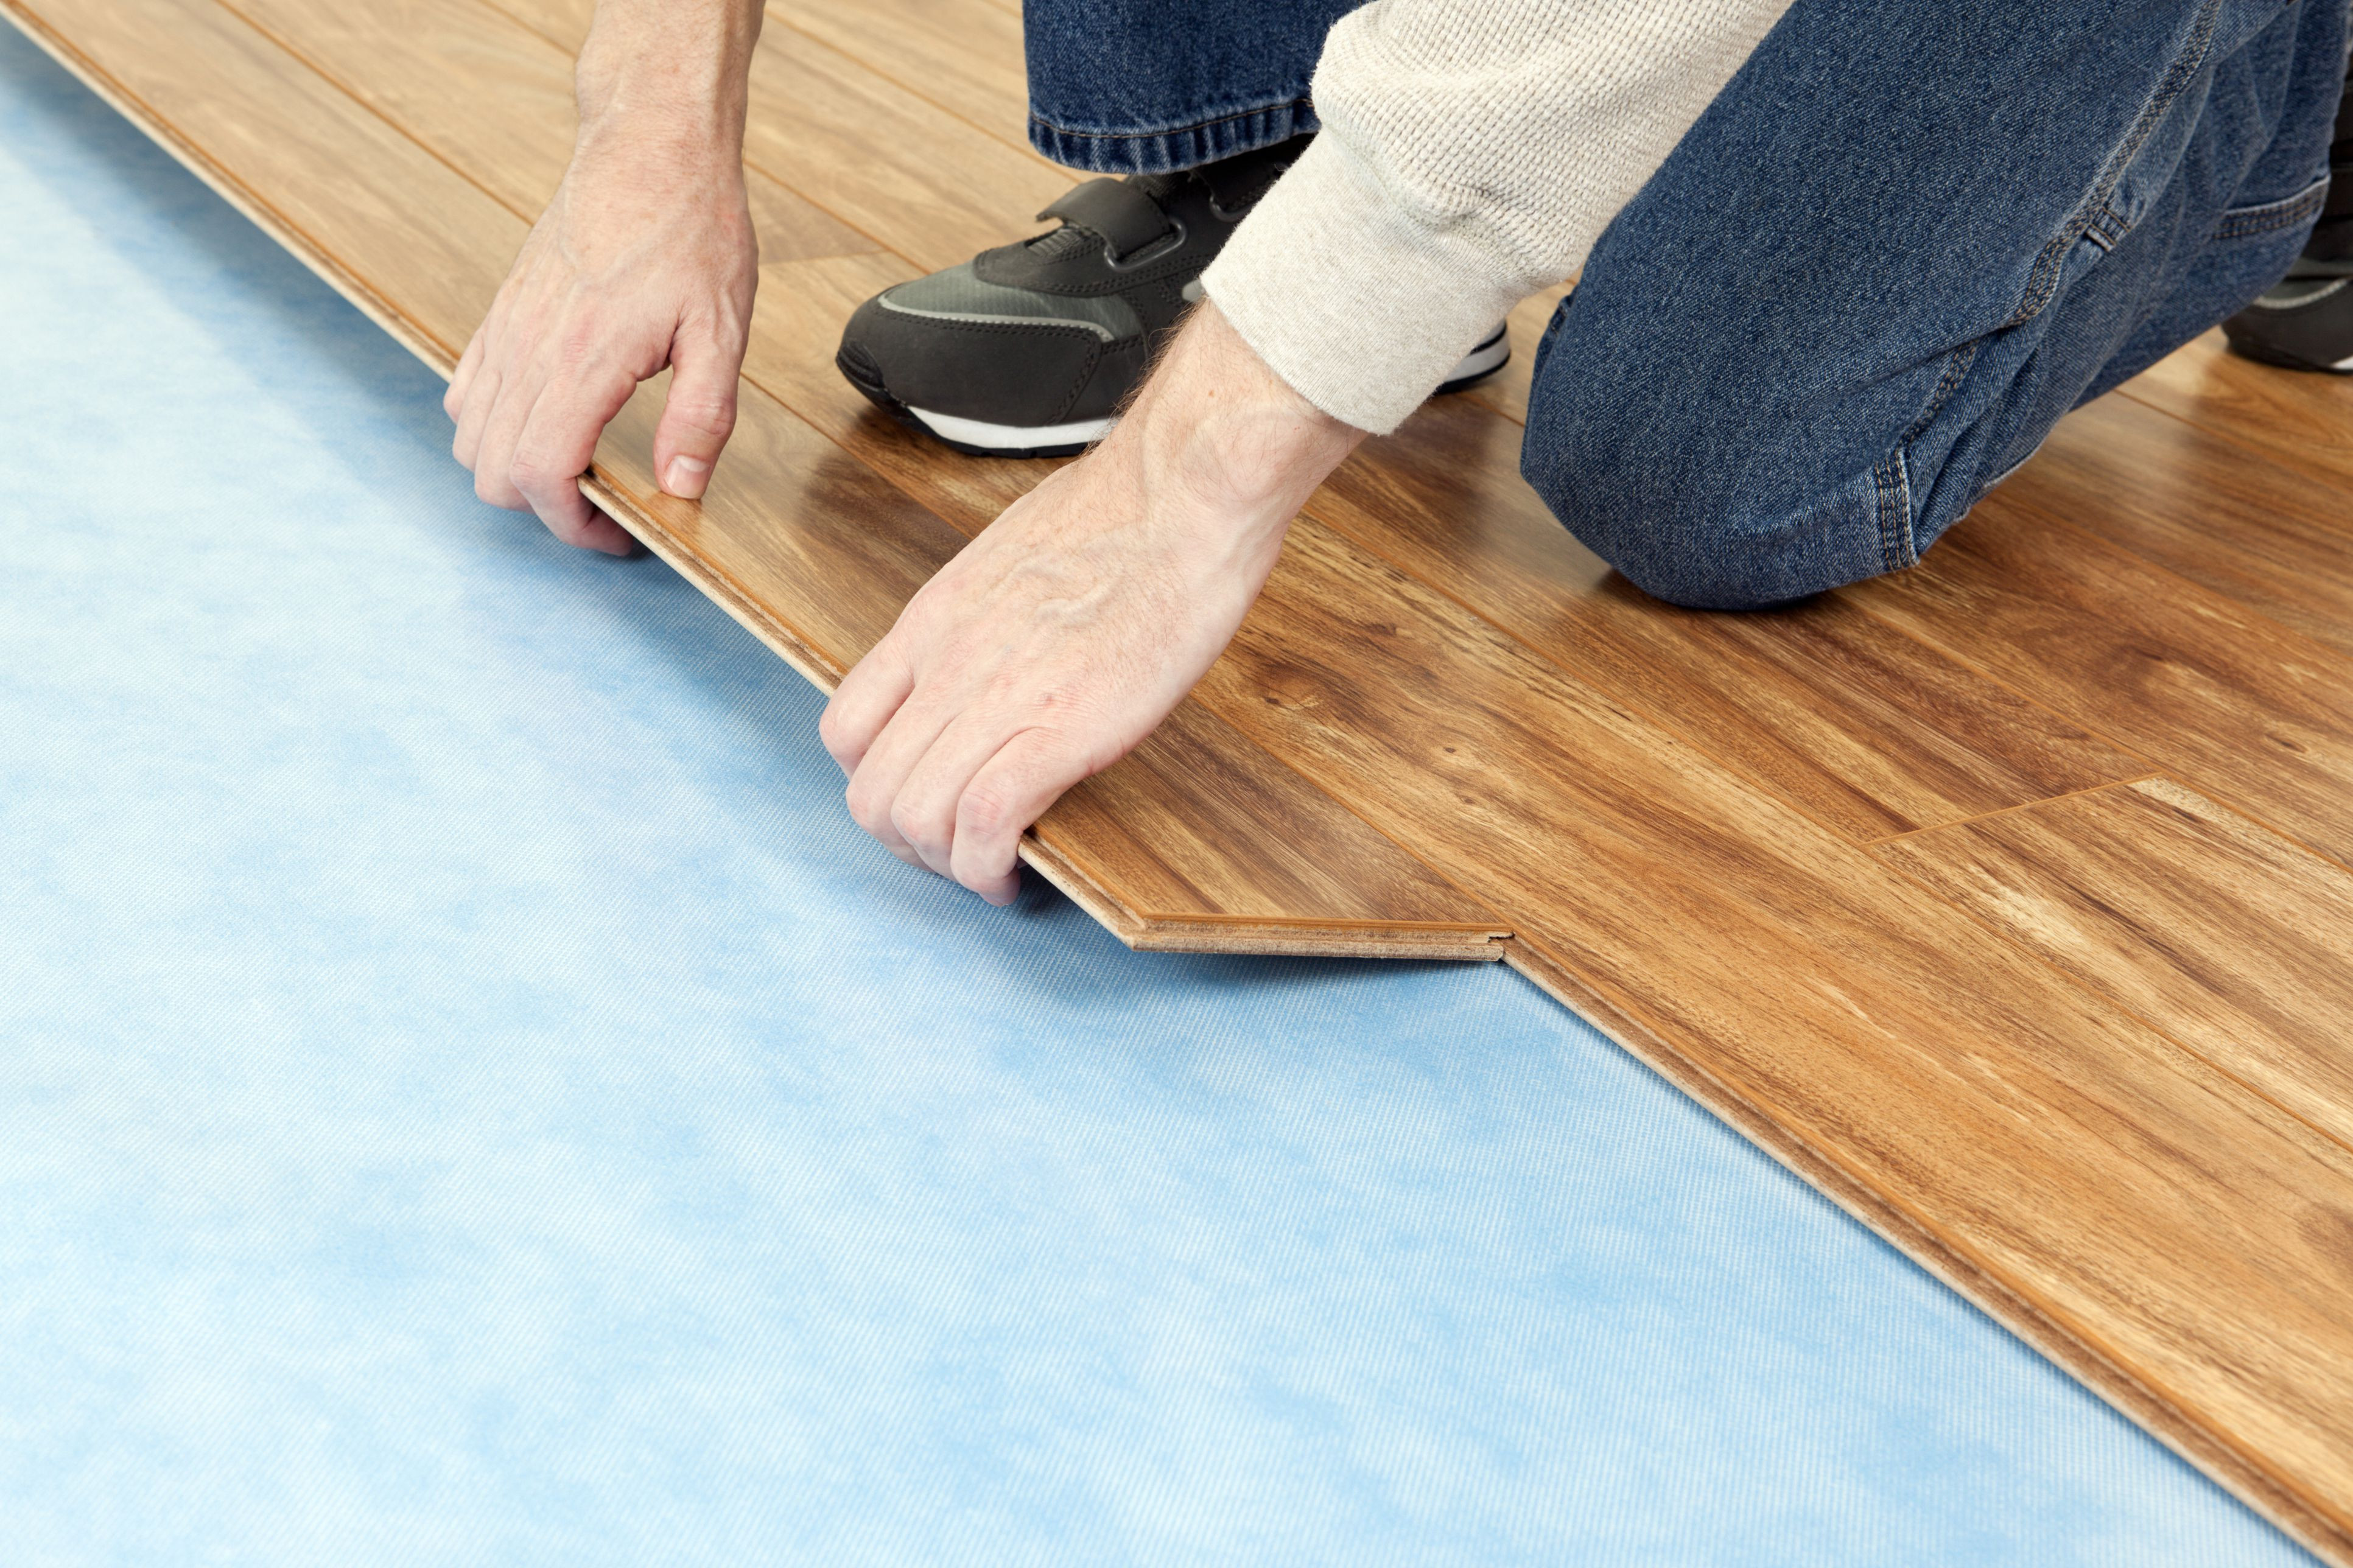 hardwood floor nailer or stapler of flooring underlayment the basics regarding new floor installation 185270632 582b722c3df78c6f6af0a8ab